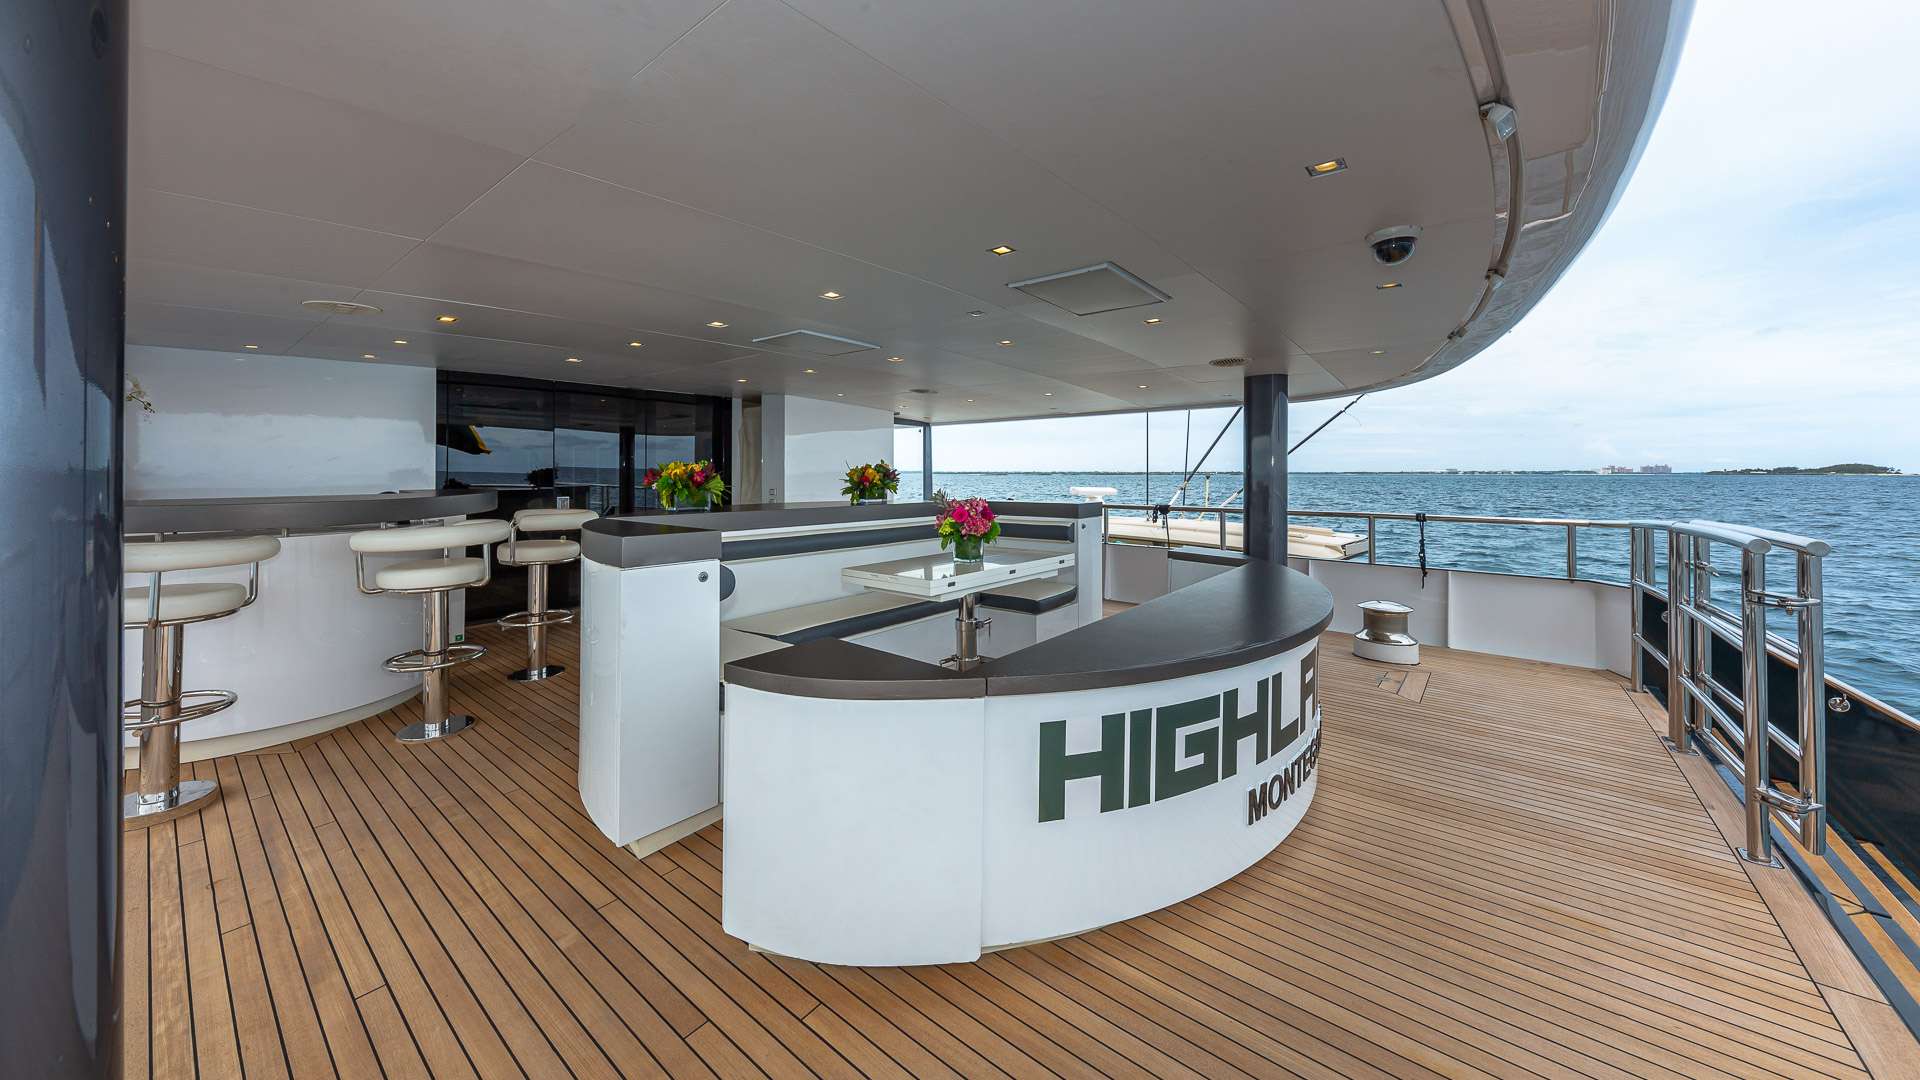 HIGHLANDER - Yacht Charter Cienfuegos & Boat hire in Caribbean, Bahamas, Florida East Coast, Cuba, Dominican Republic, Turks and Caicos, USA South East 5